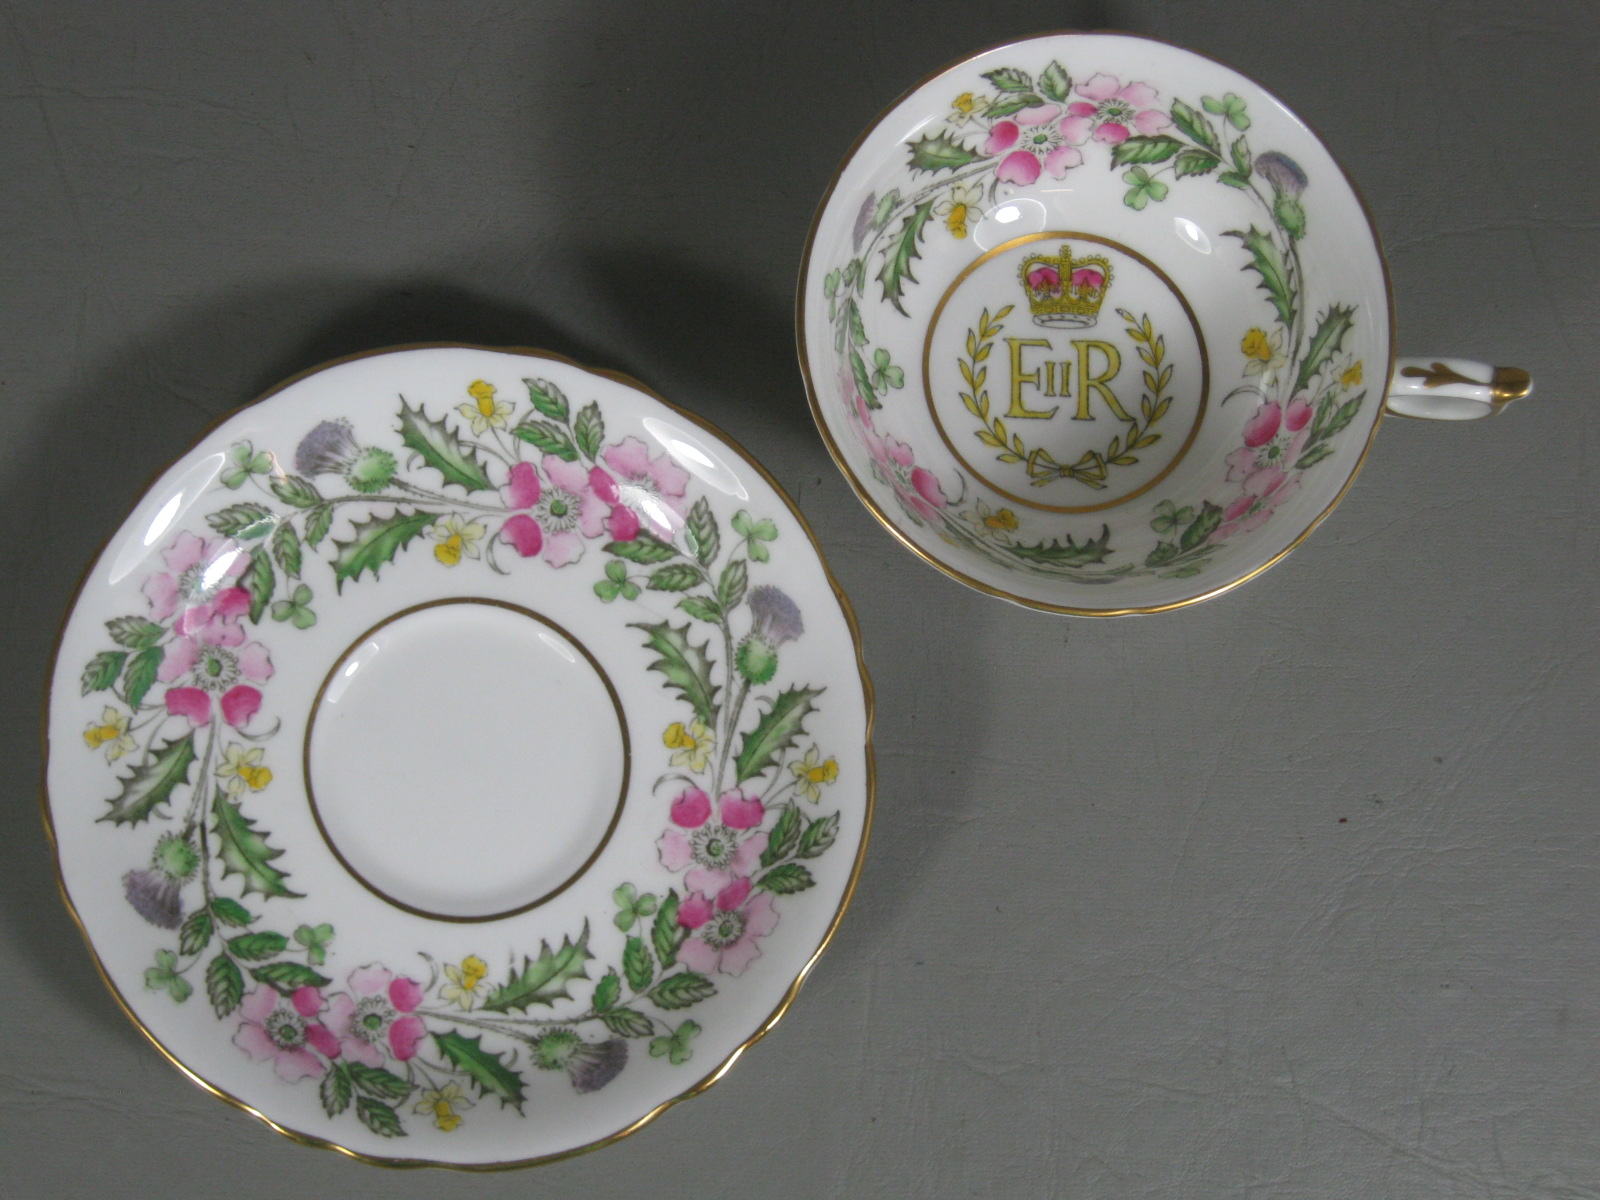 2 Paragon Bone China Queen Elizabeth II 1953 Coronation Tea Cups Teacups Saucers 11